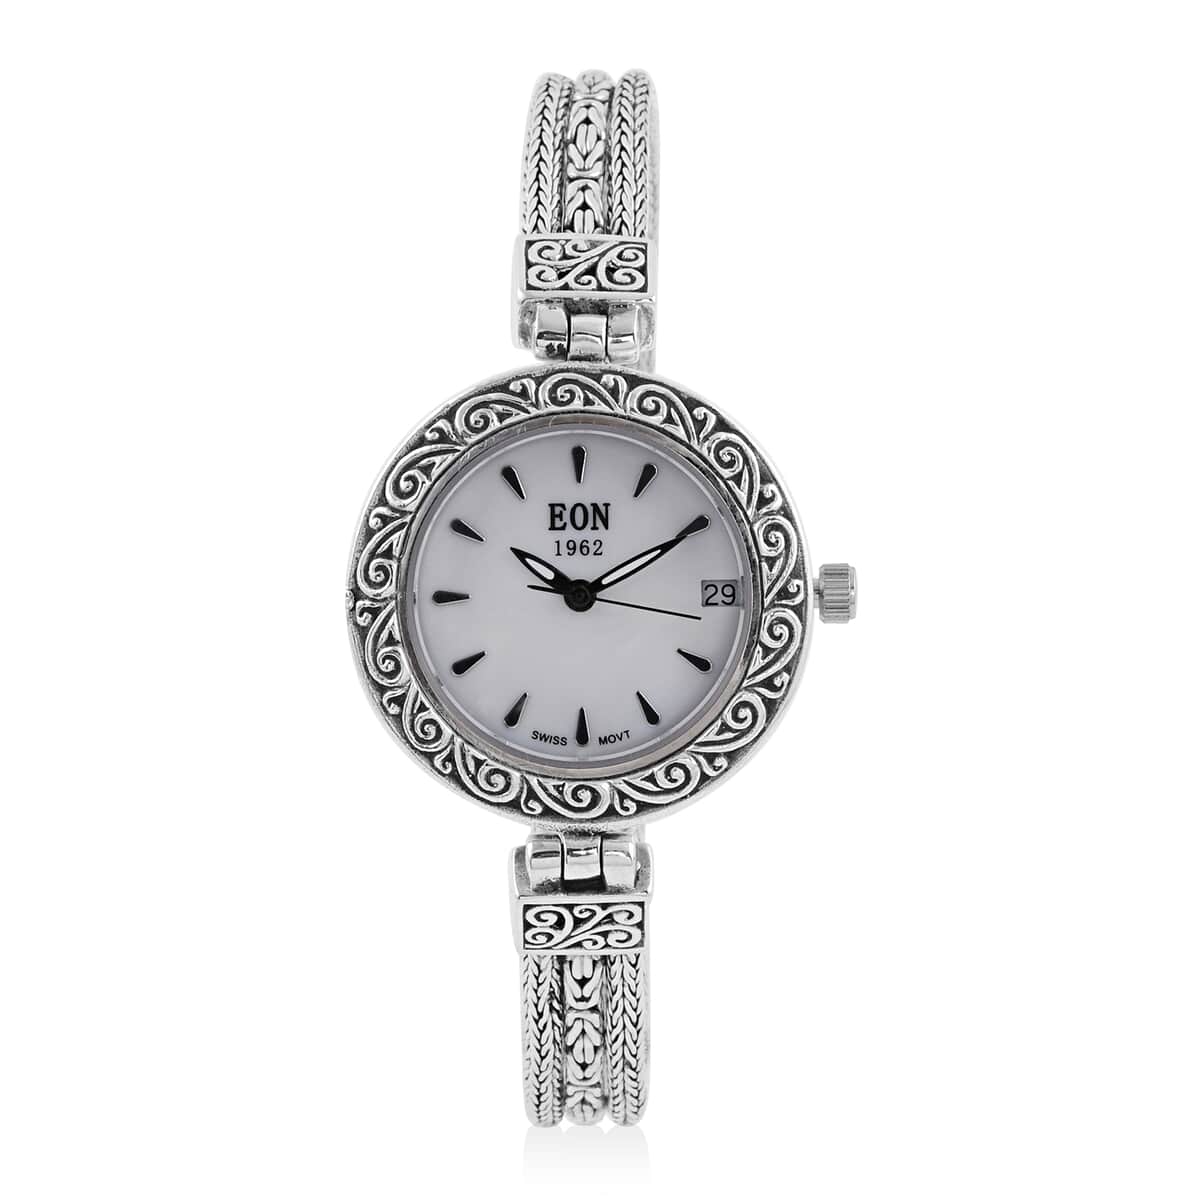 Bali Legacy Eon 1962 Swiss Movement Water Resistant Bracelet Watch in Sterling Silver (8.0 in) 34 Grams image number 0